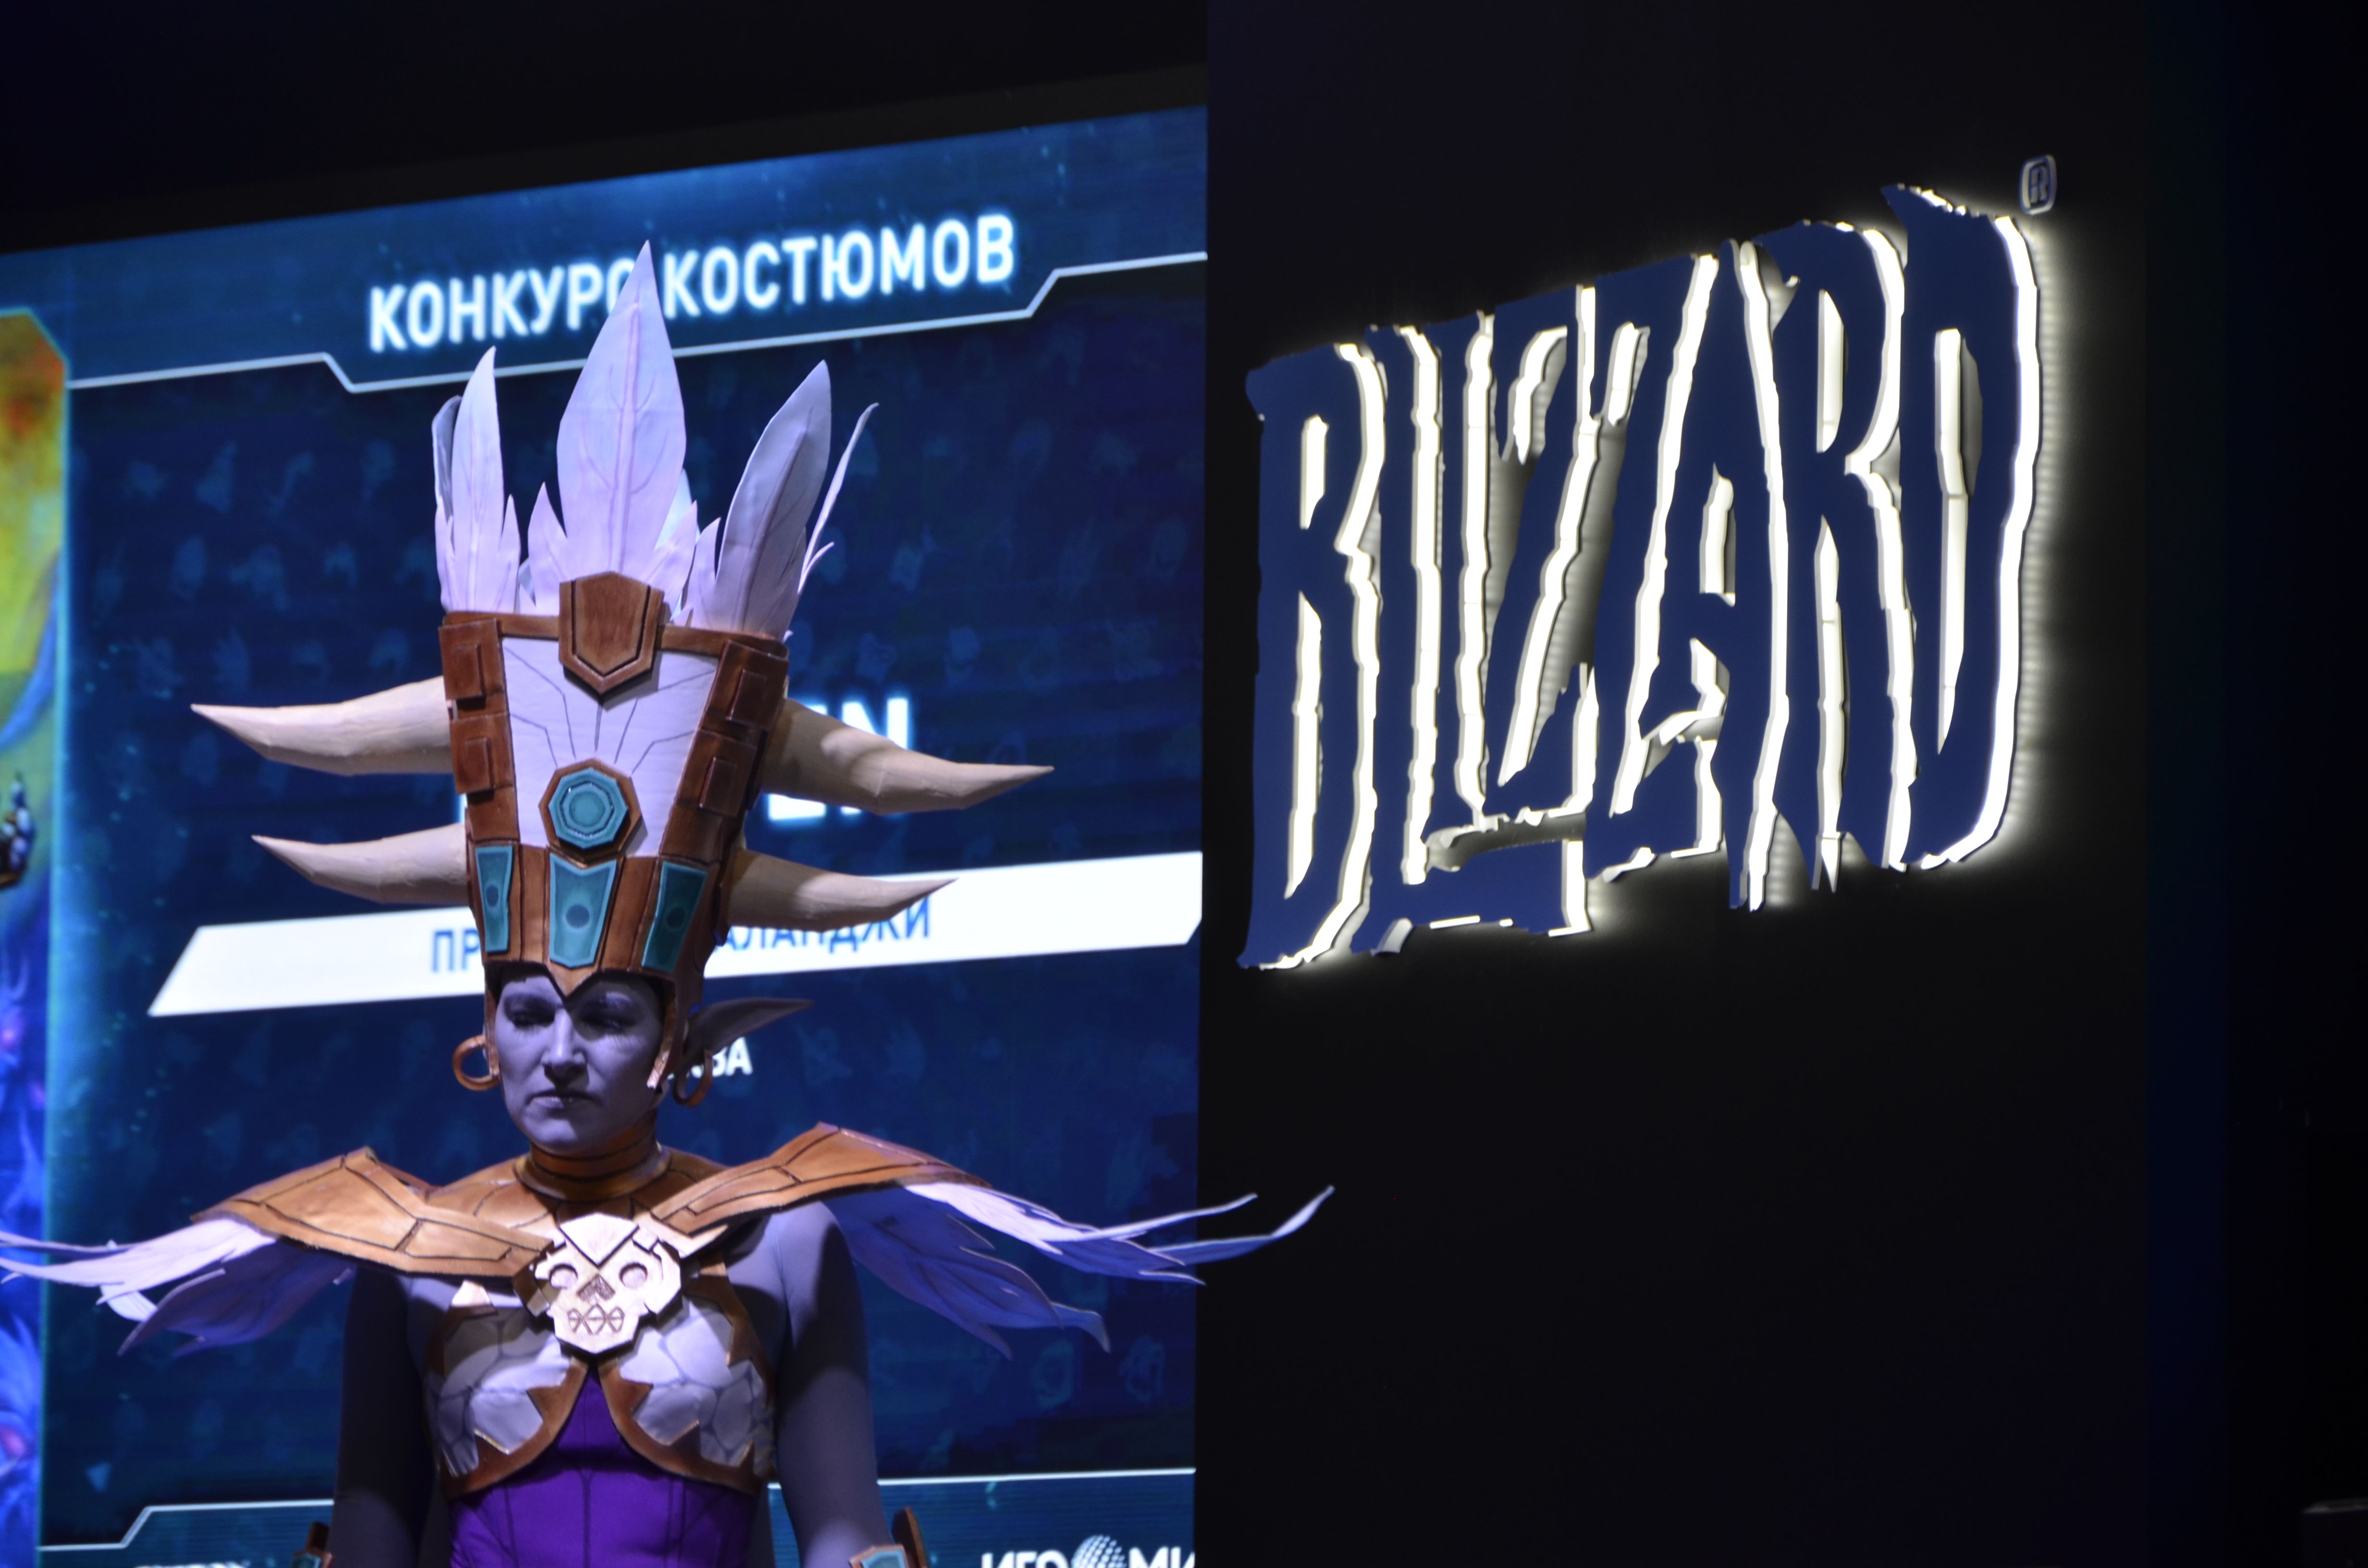 Таланджи. Косплей-дефиле от Blizzard на выставке &laquo;ИгроМир 2019&raquo;. Автор: Екатерина Ульяненко / Cybersport.ru